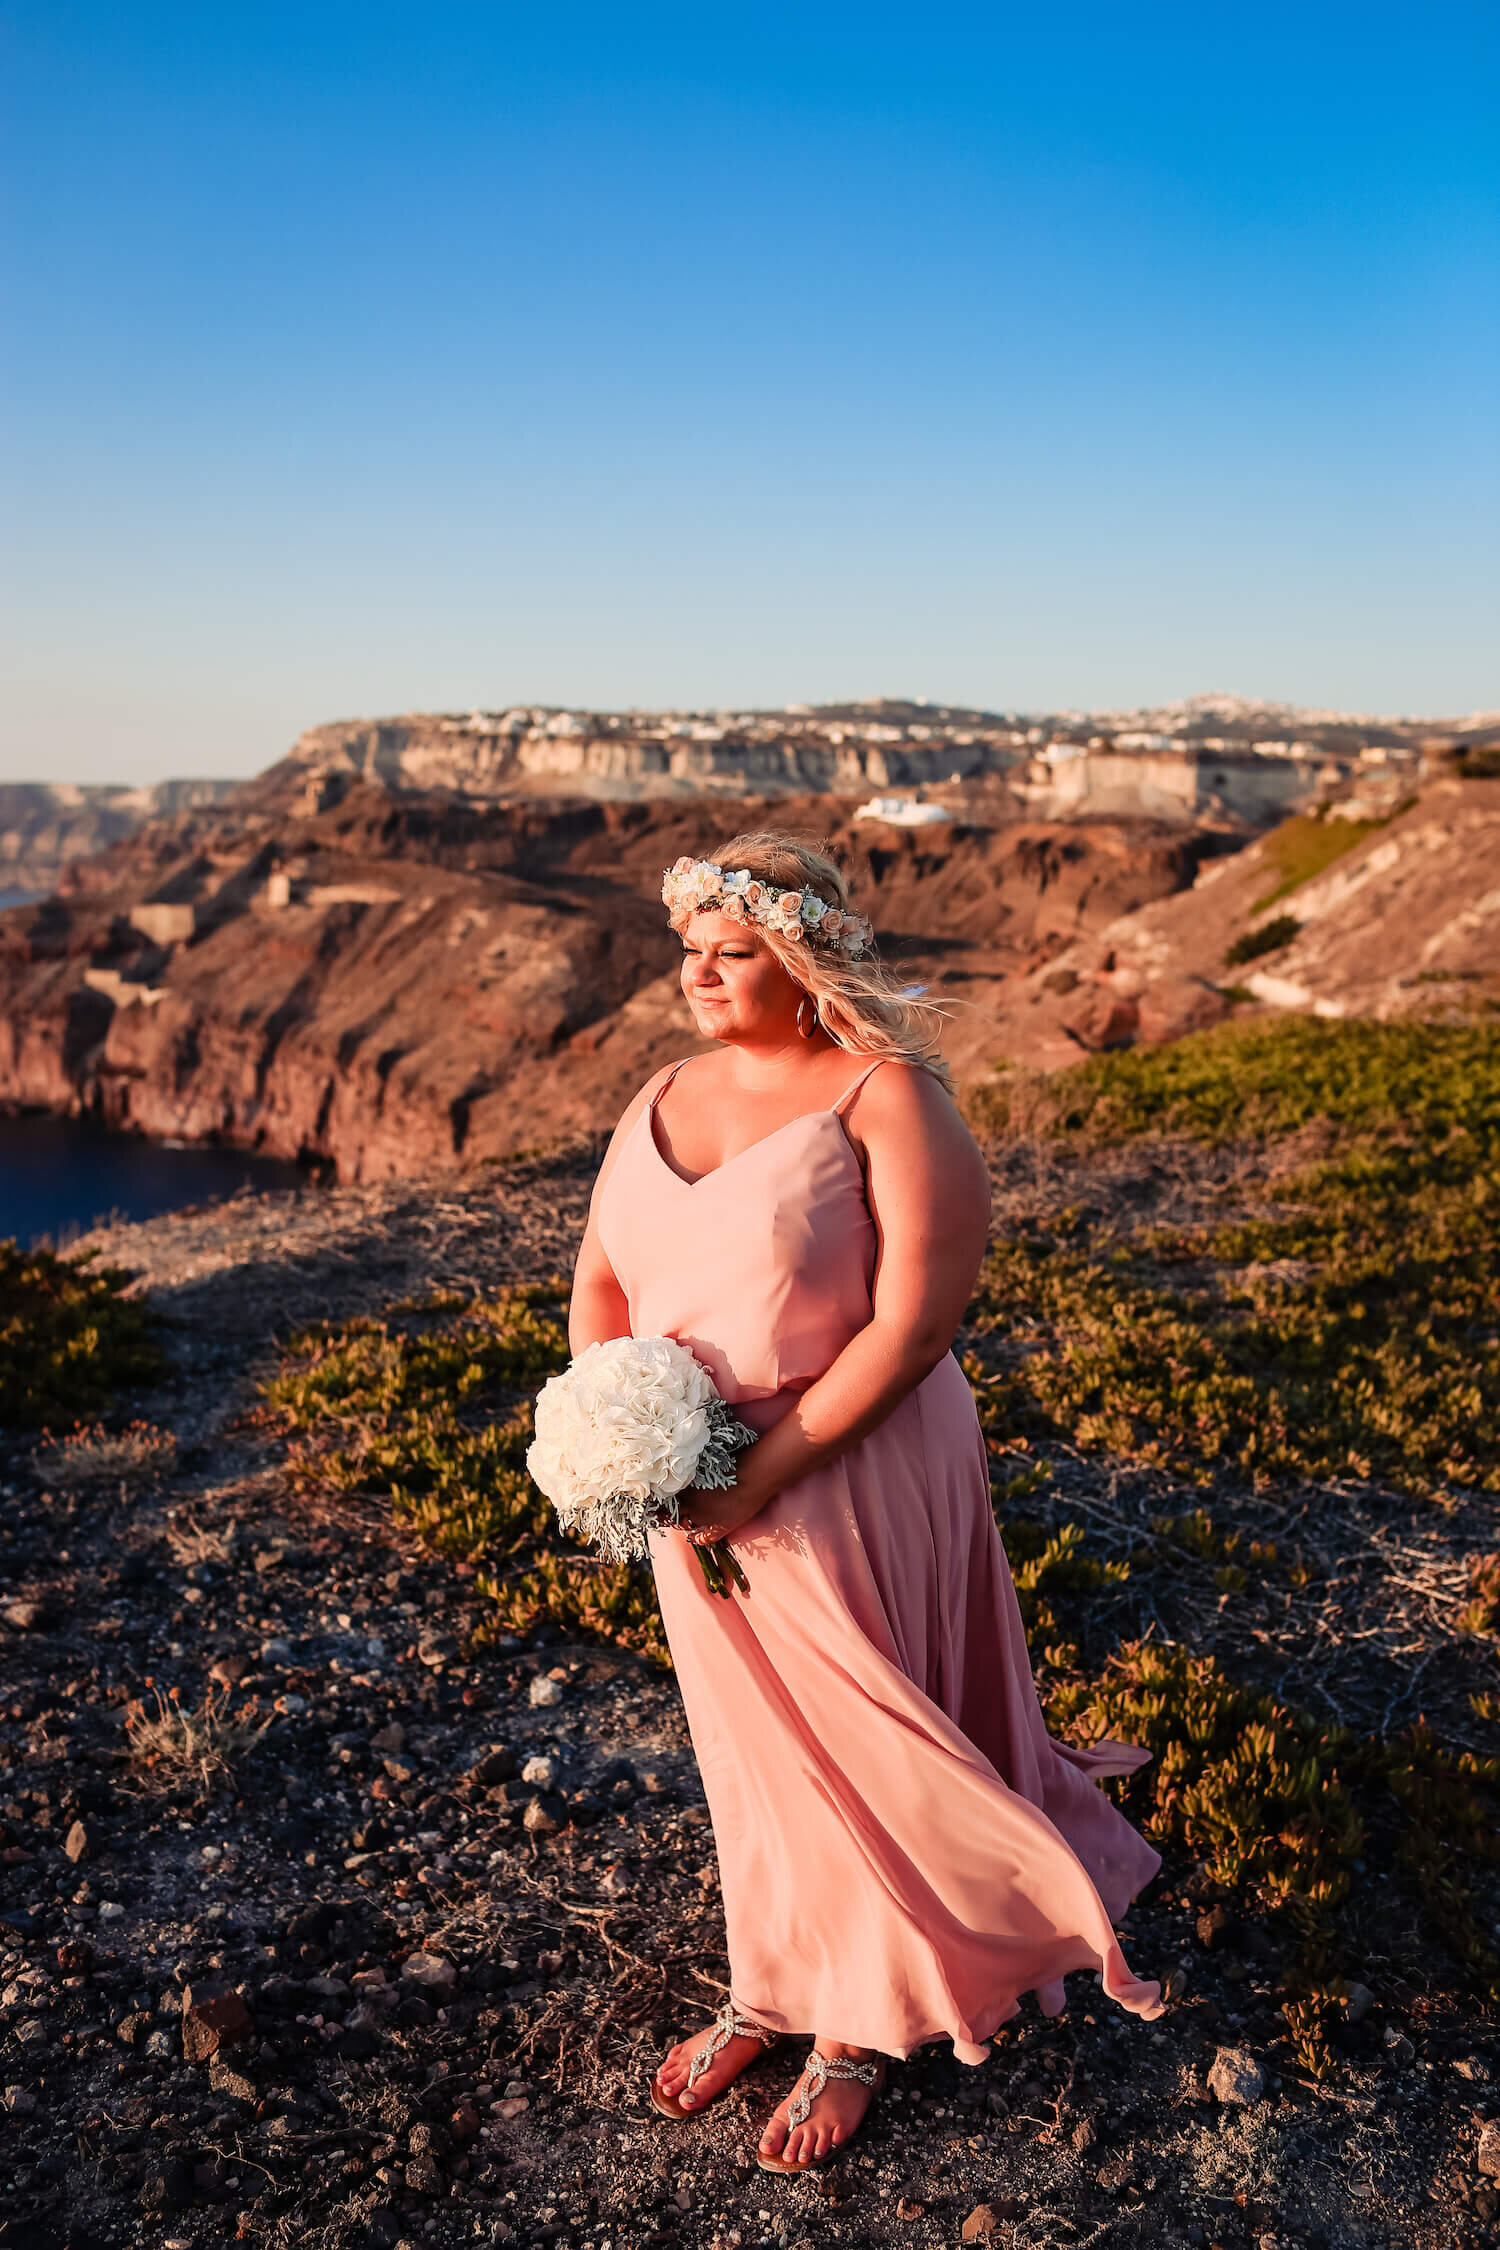 how-to-plan-a-destination-wedding-legally-in-santorini-greece-desti-bride-lisa-desti-guide-to-destination-weddings-podcast-3-2019.jpg